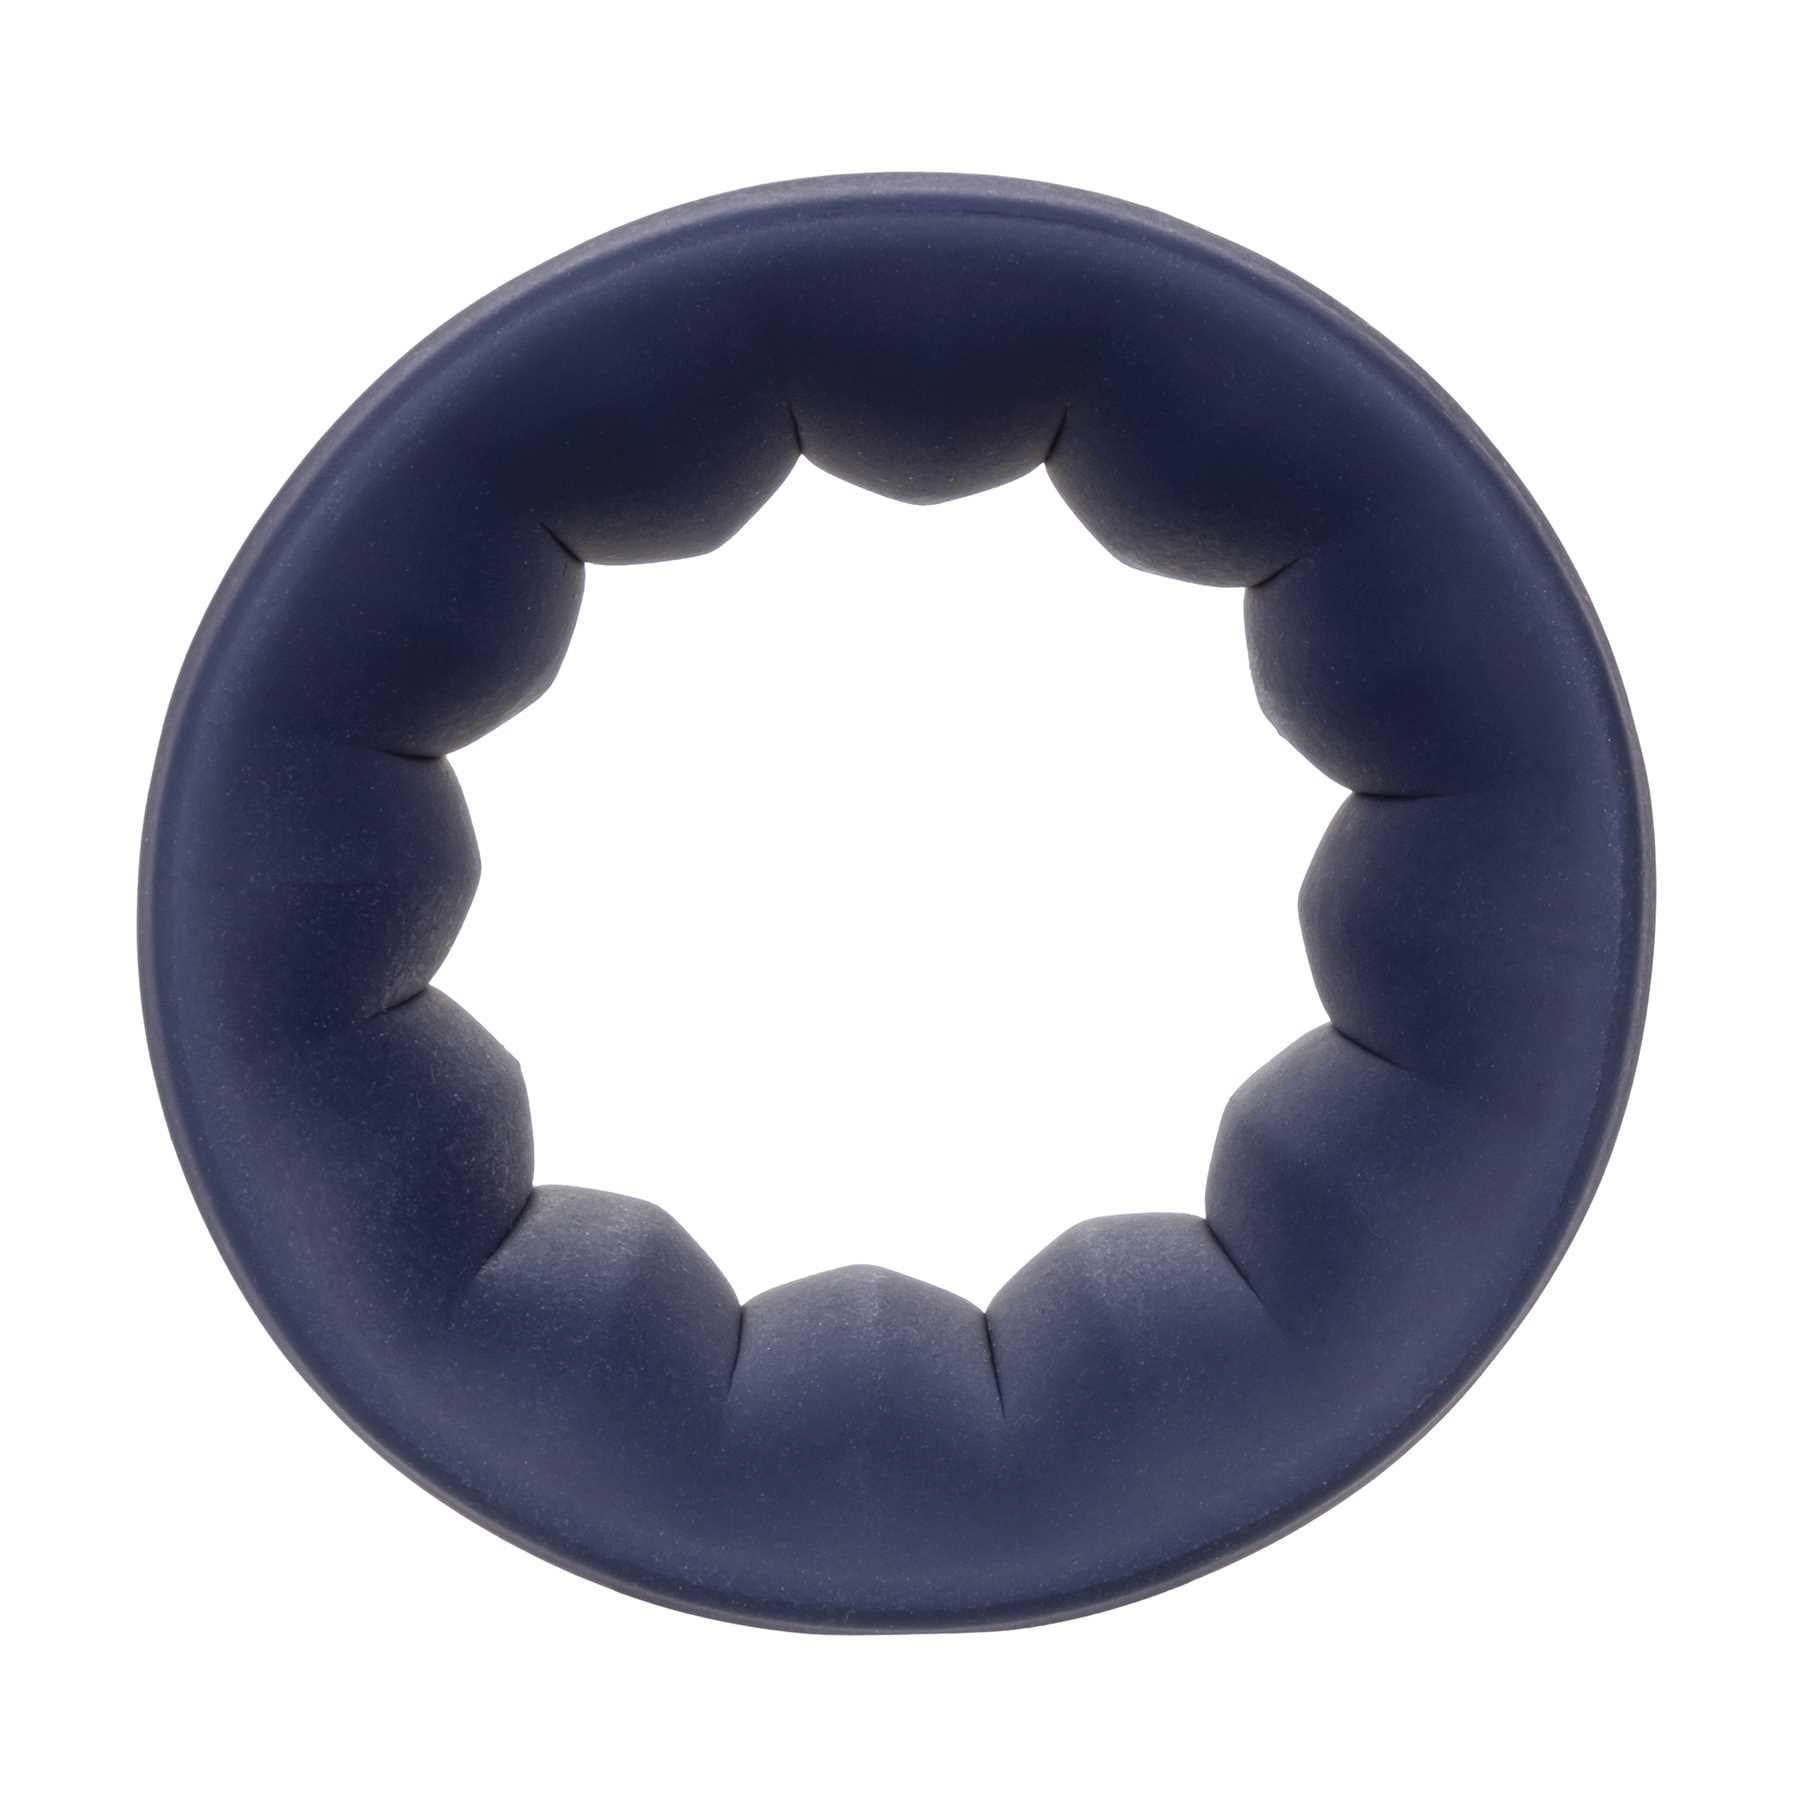 Viceroy Reverse Stamina Ring product image 2